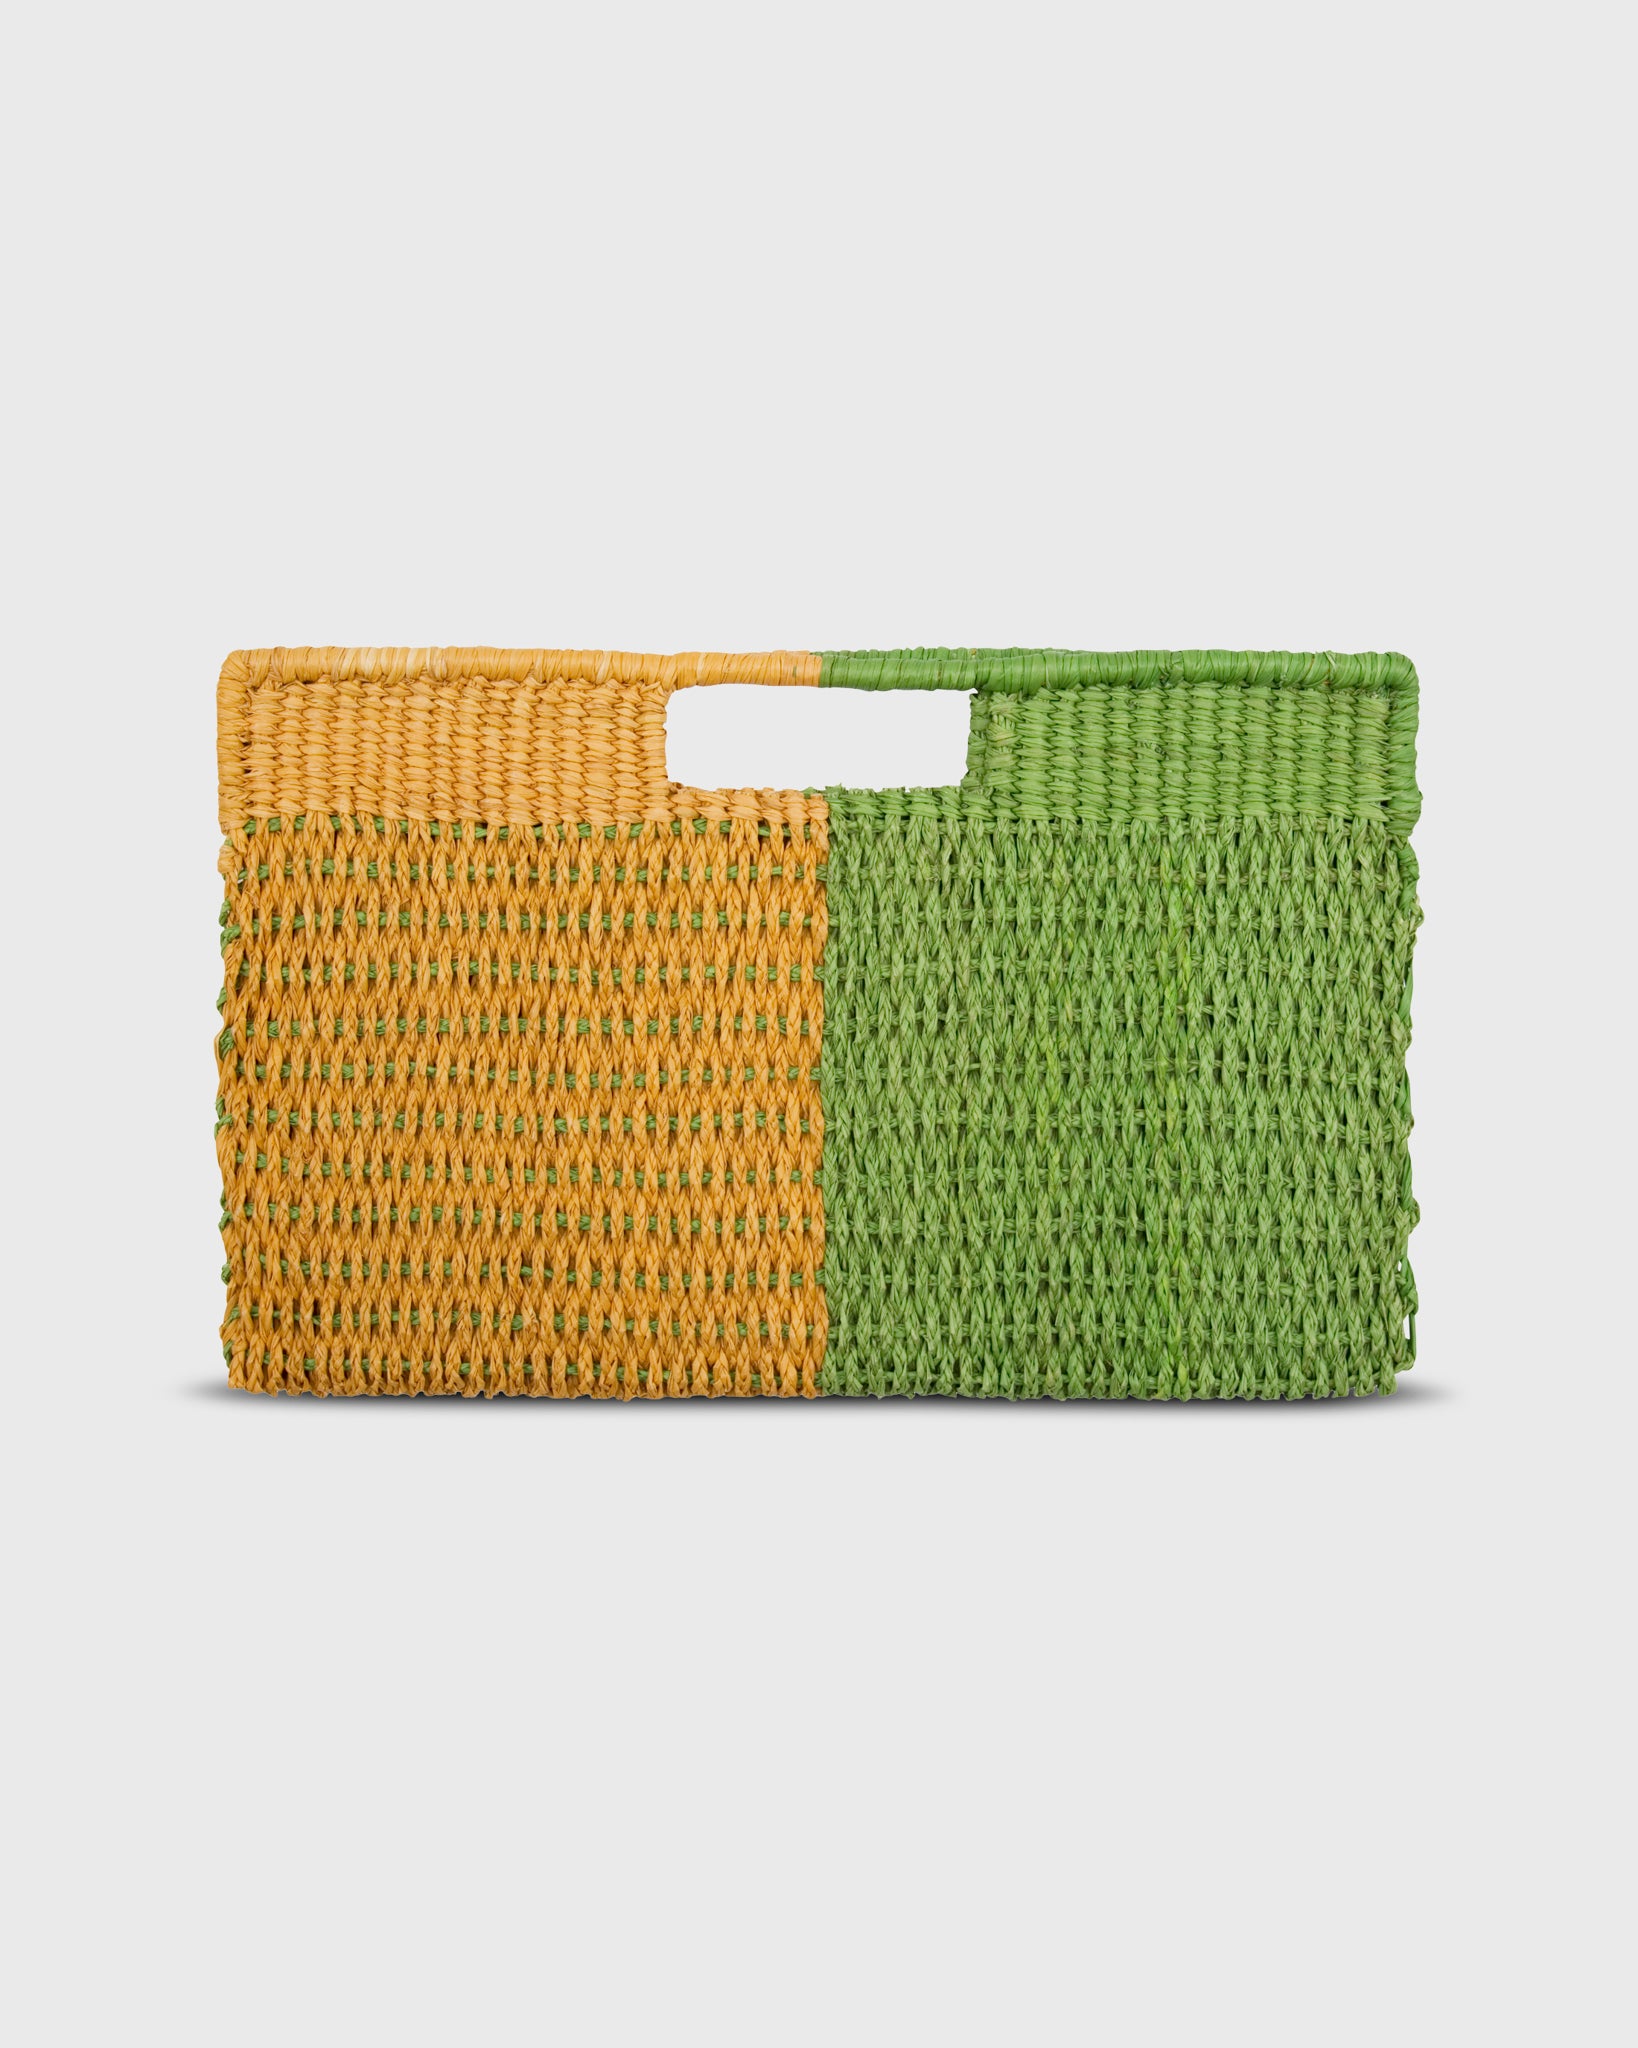 Small Grenada Bag in Parrot Green/Cinnamon